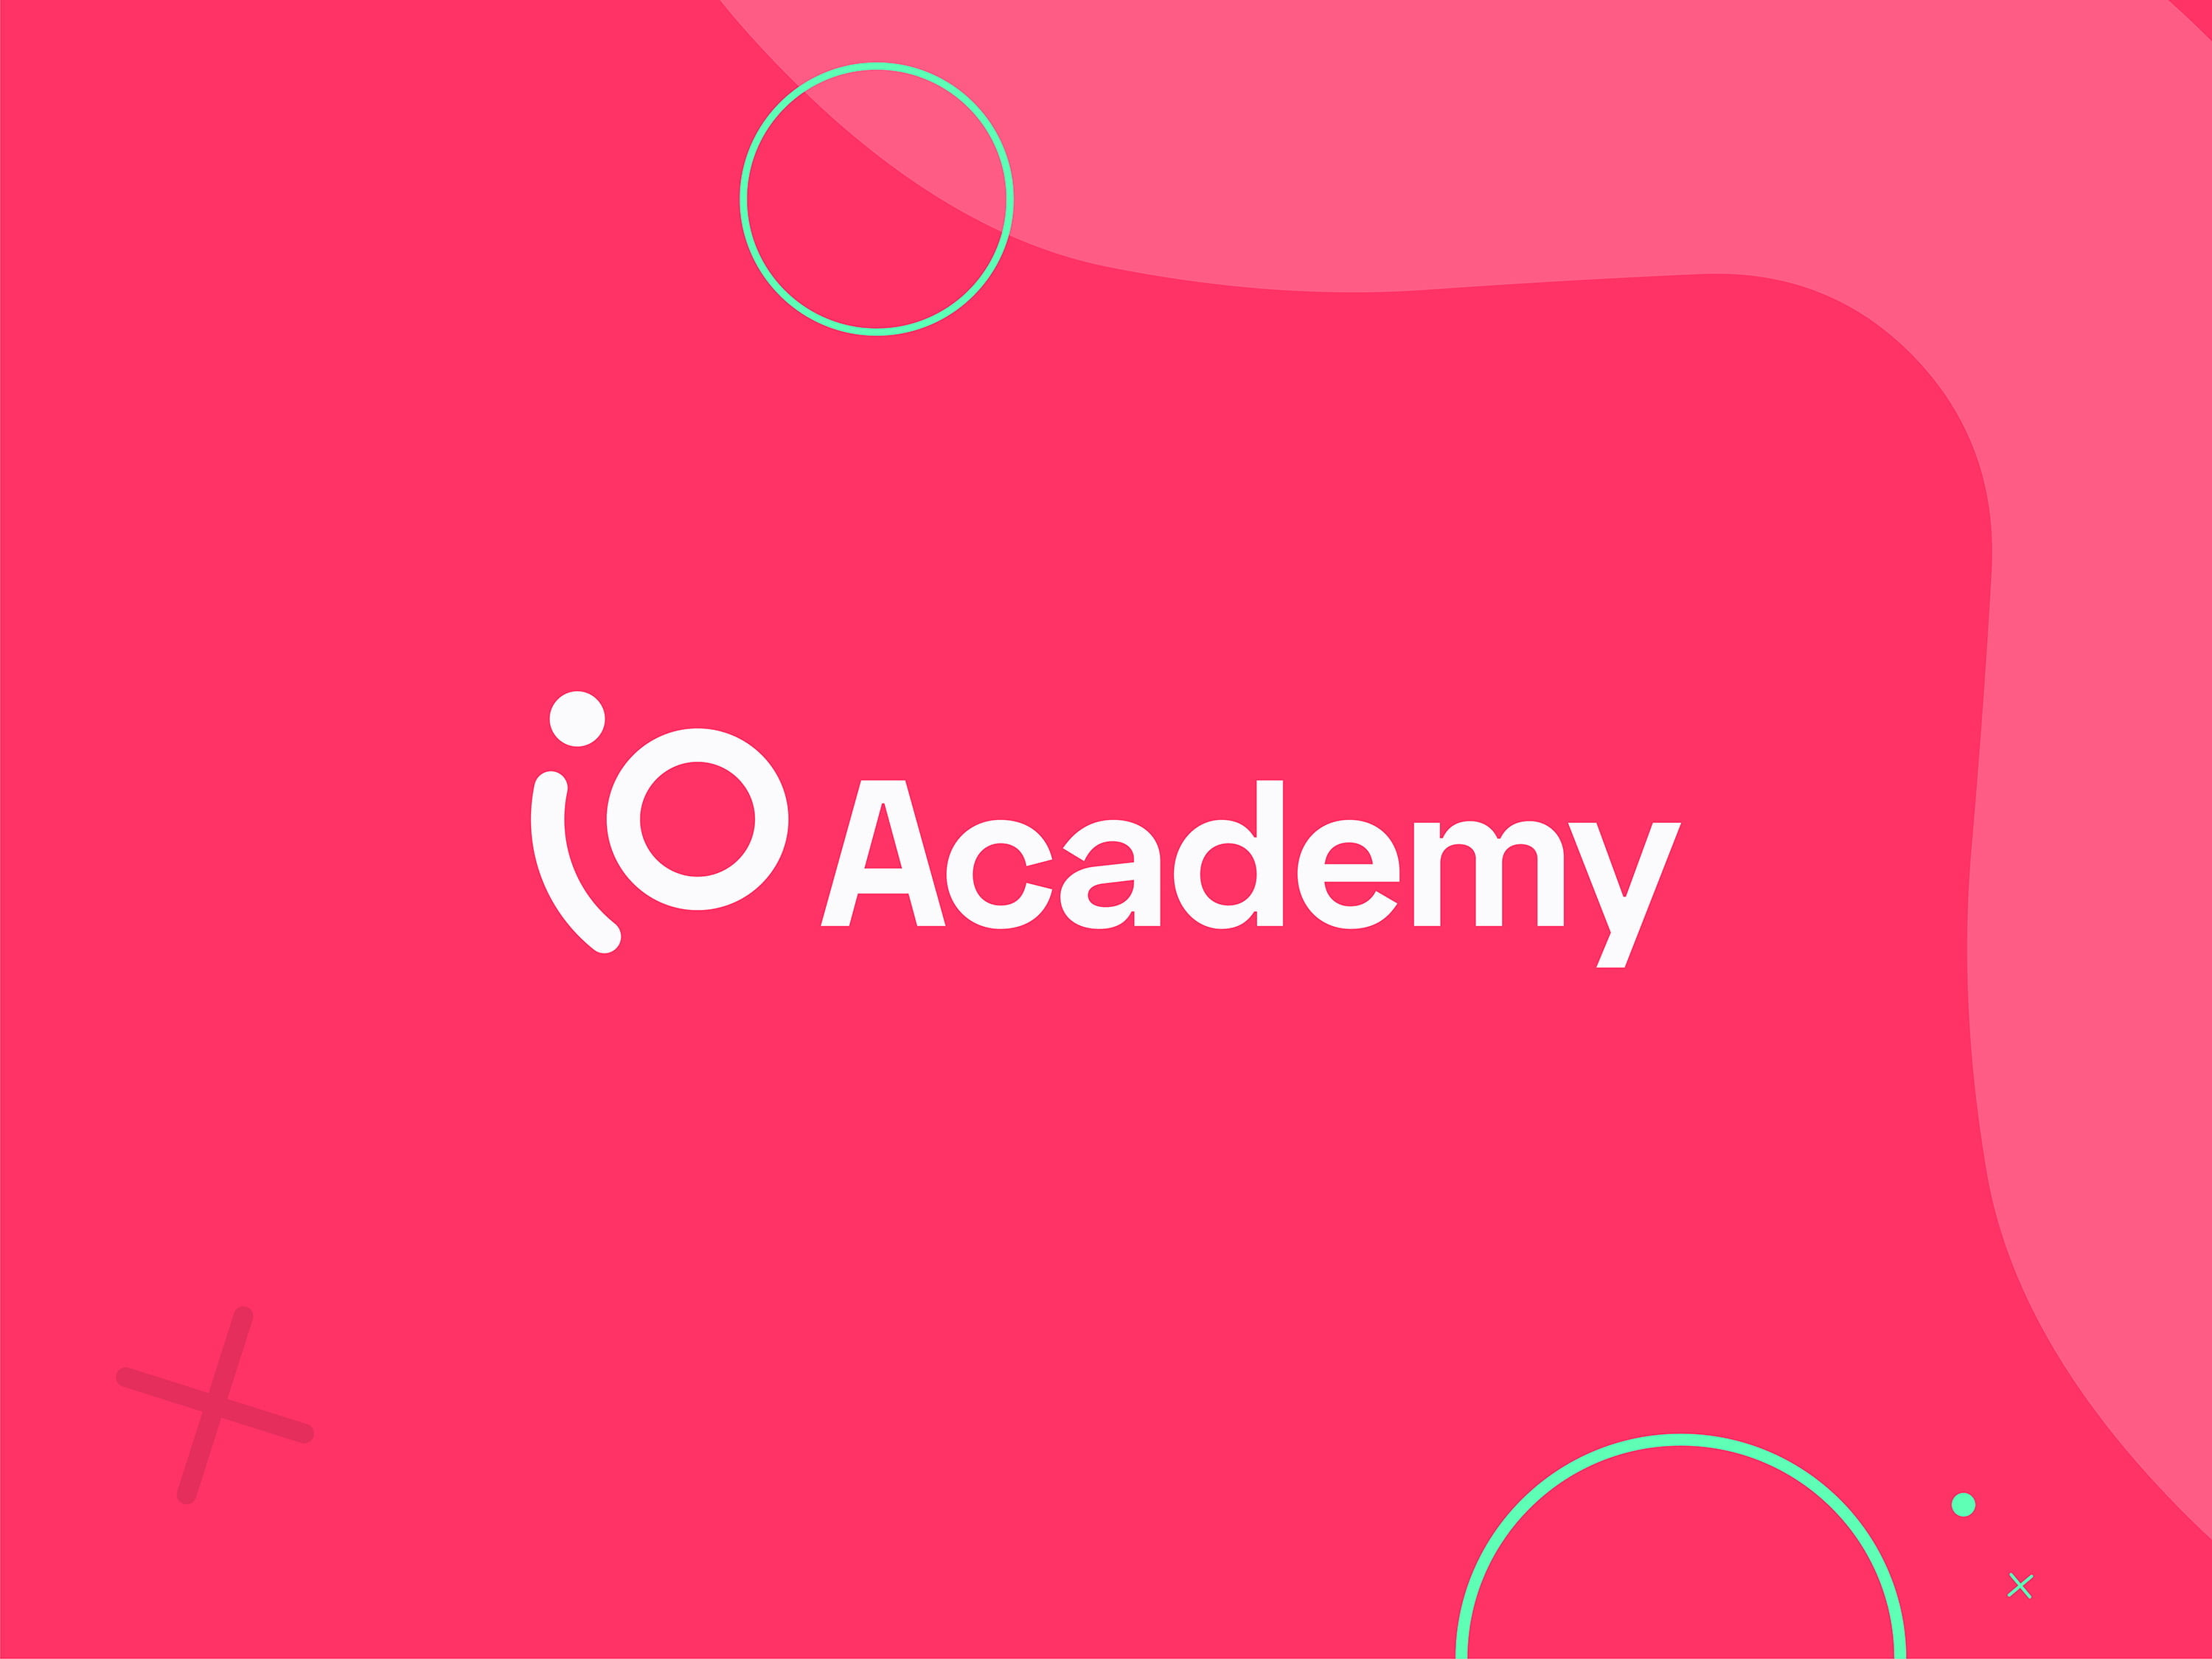 Mayden Academy becomes iO Academy - iO Academy